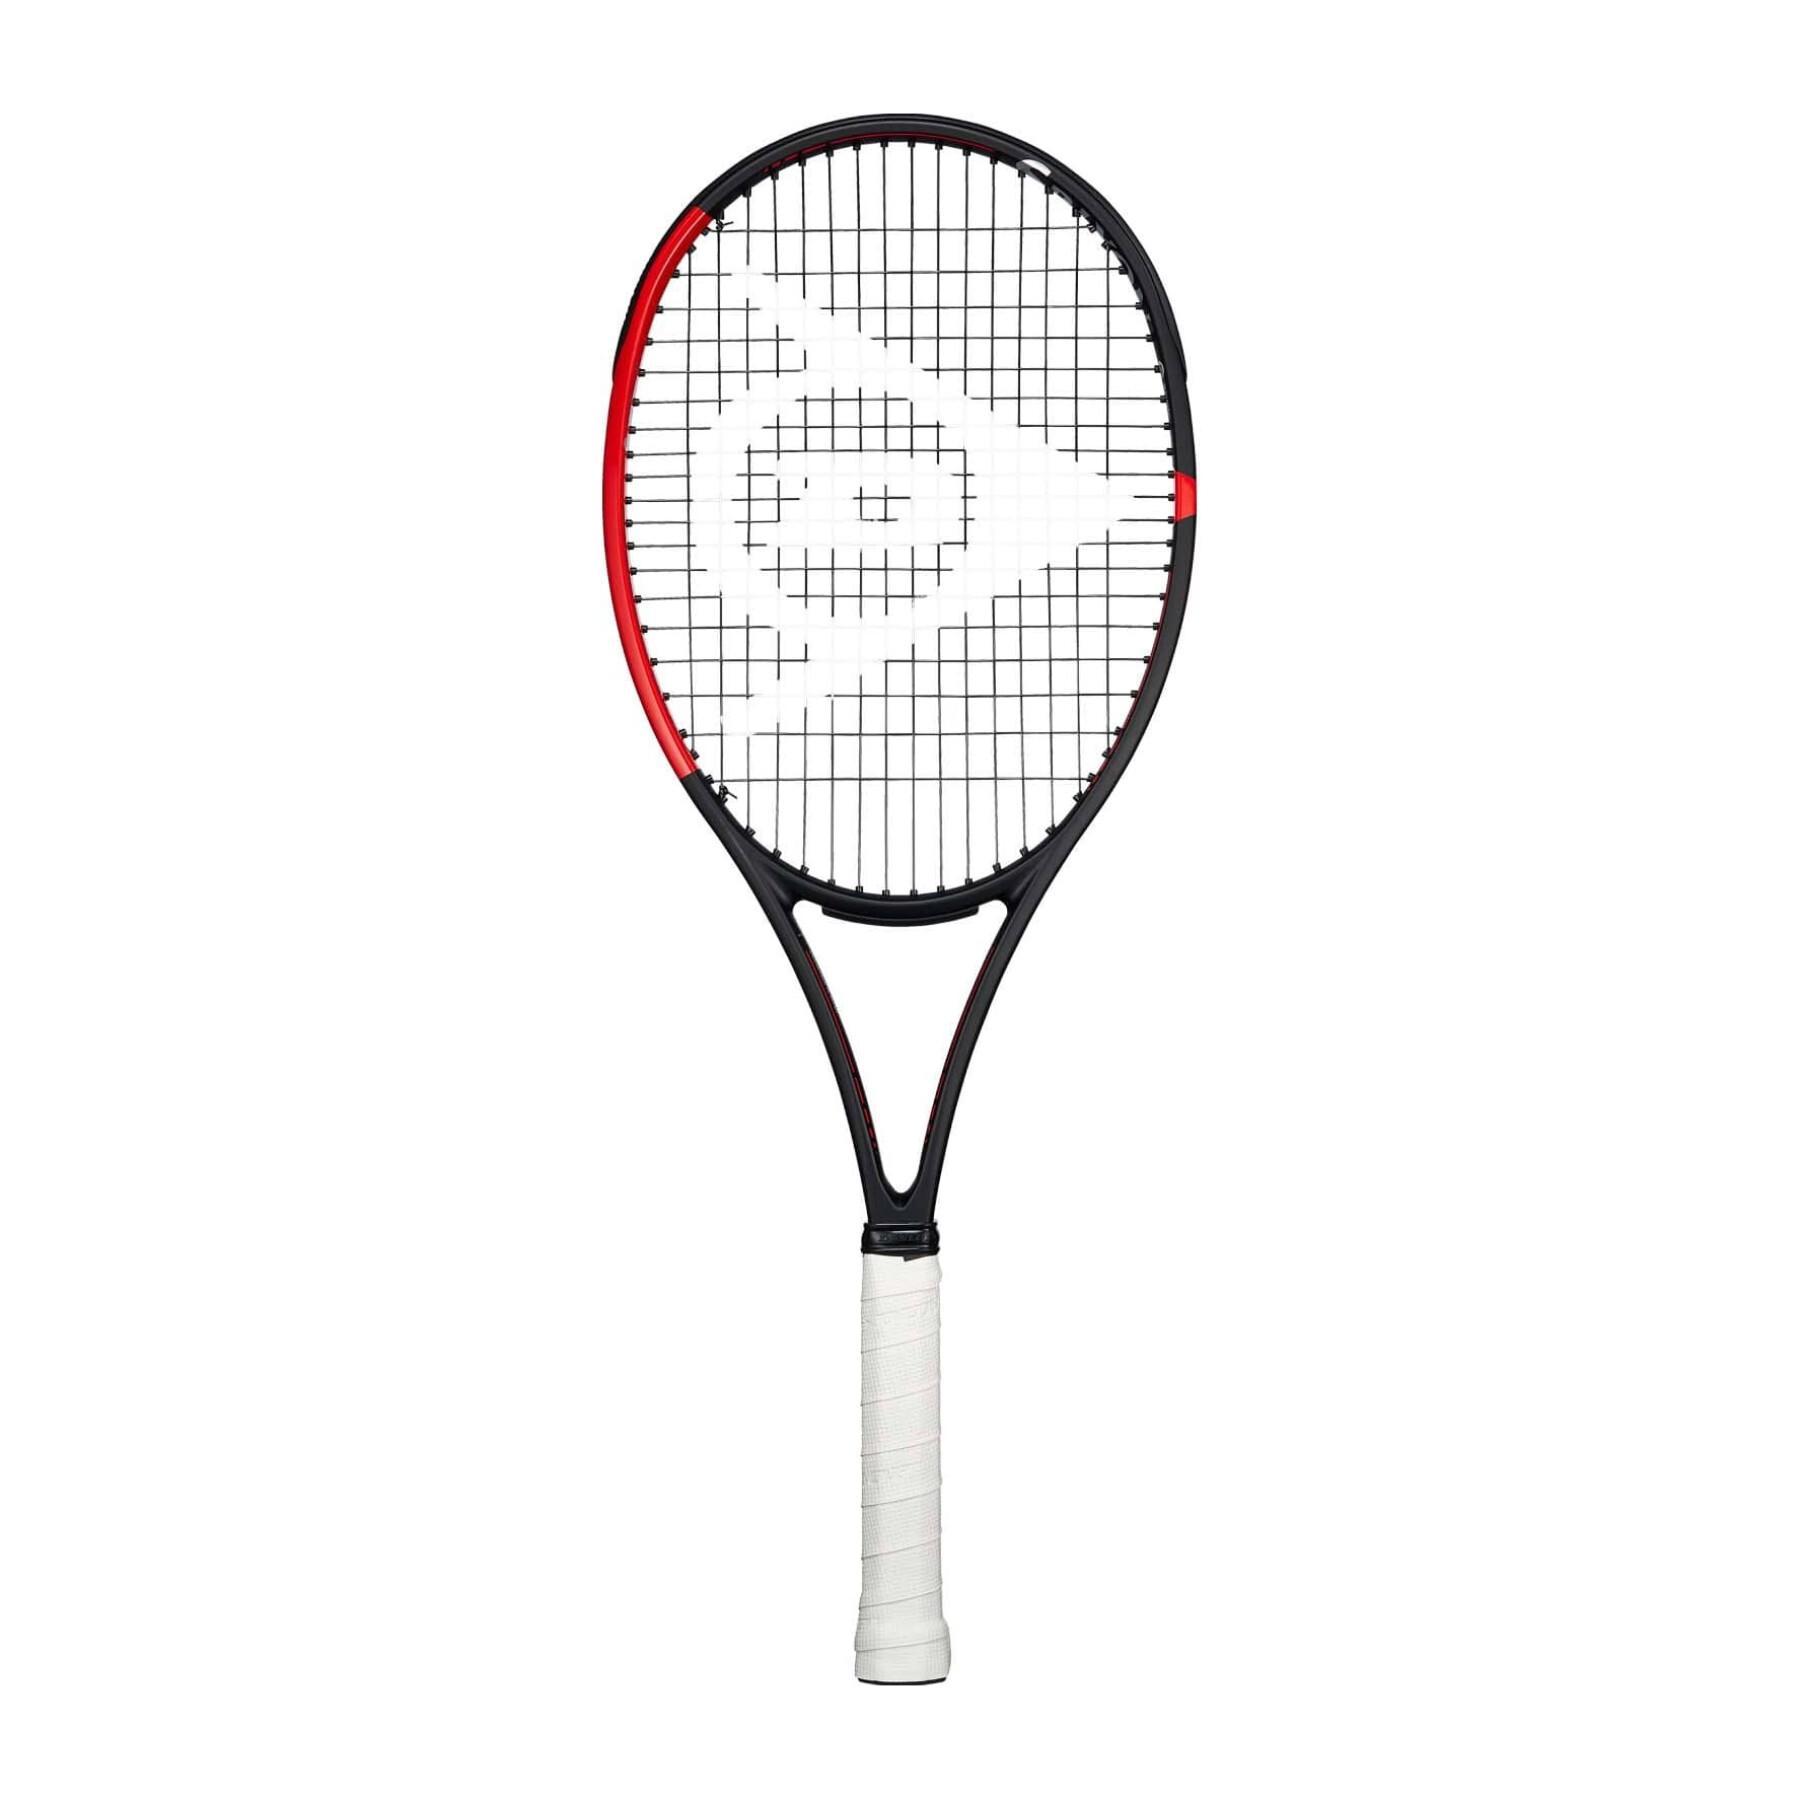 Racket Dunlop n 19 cx 200 ls g1